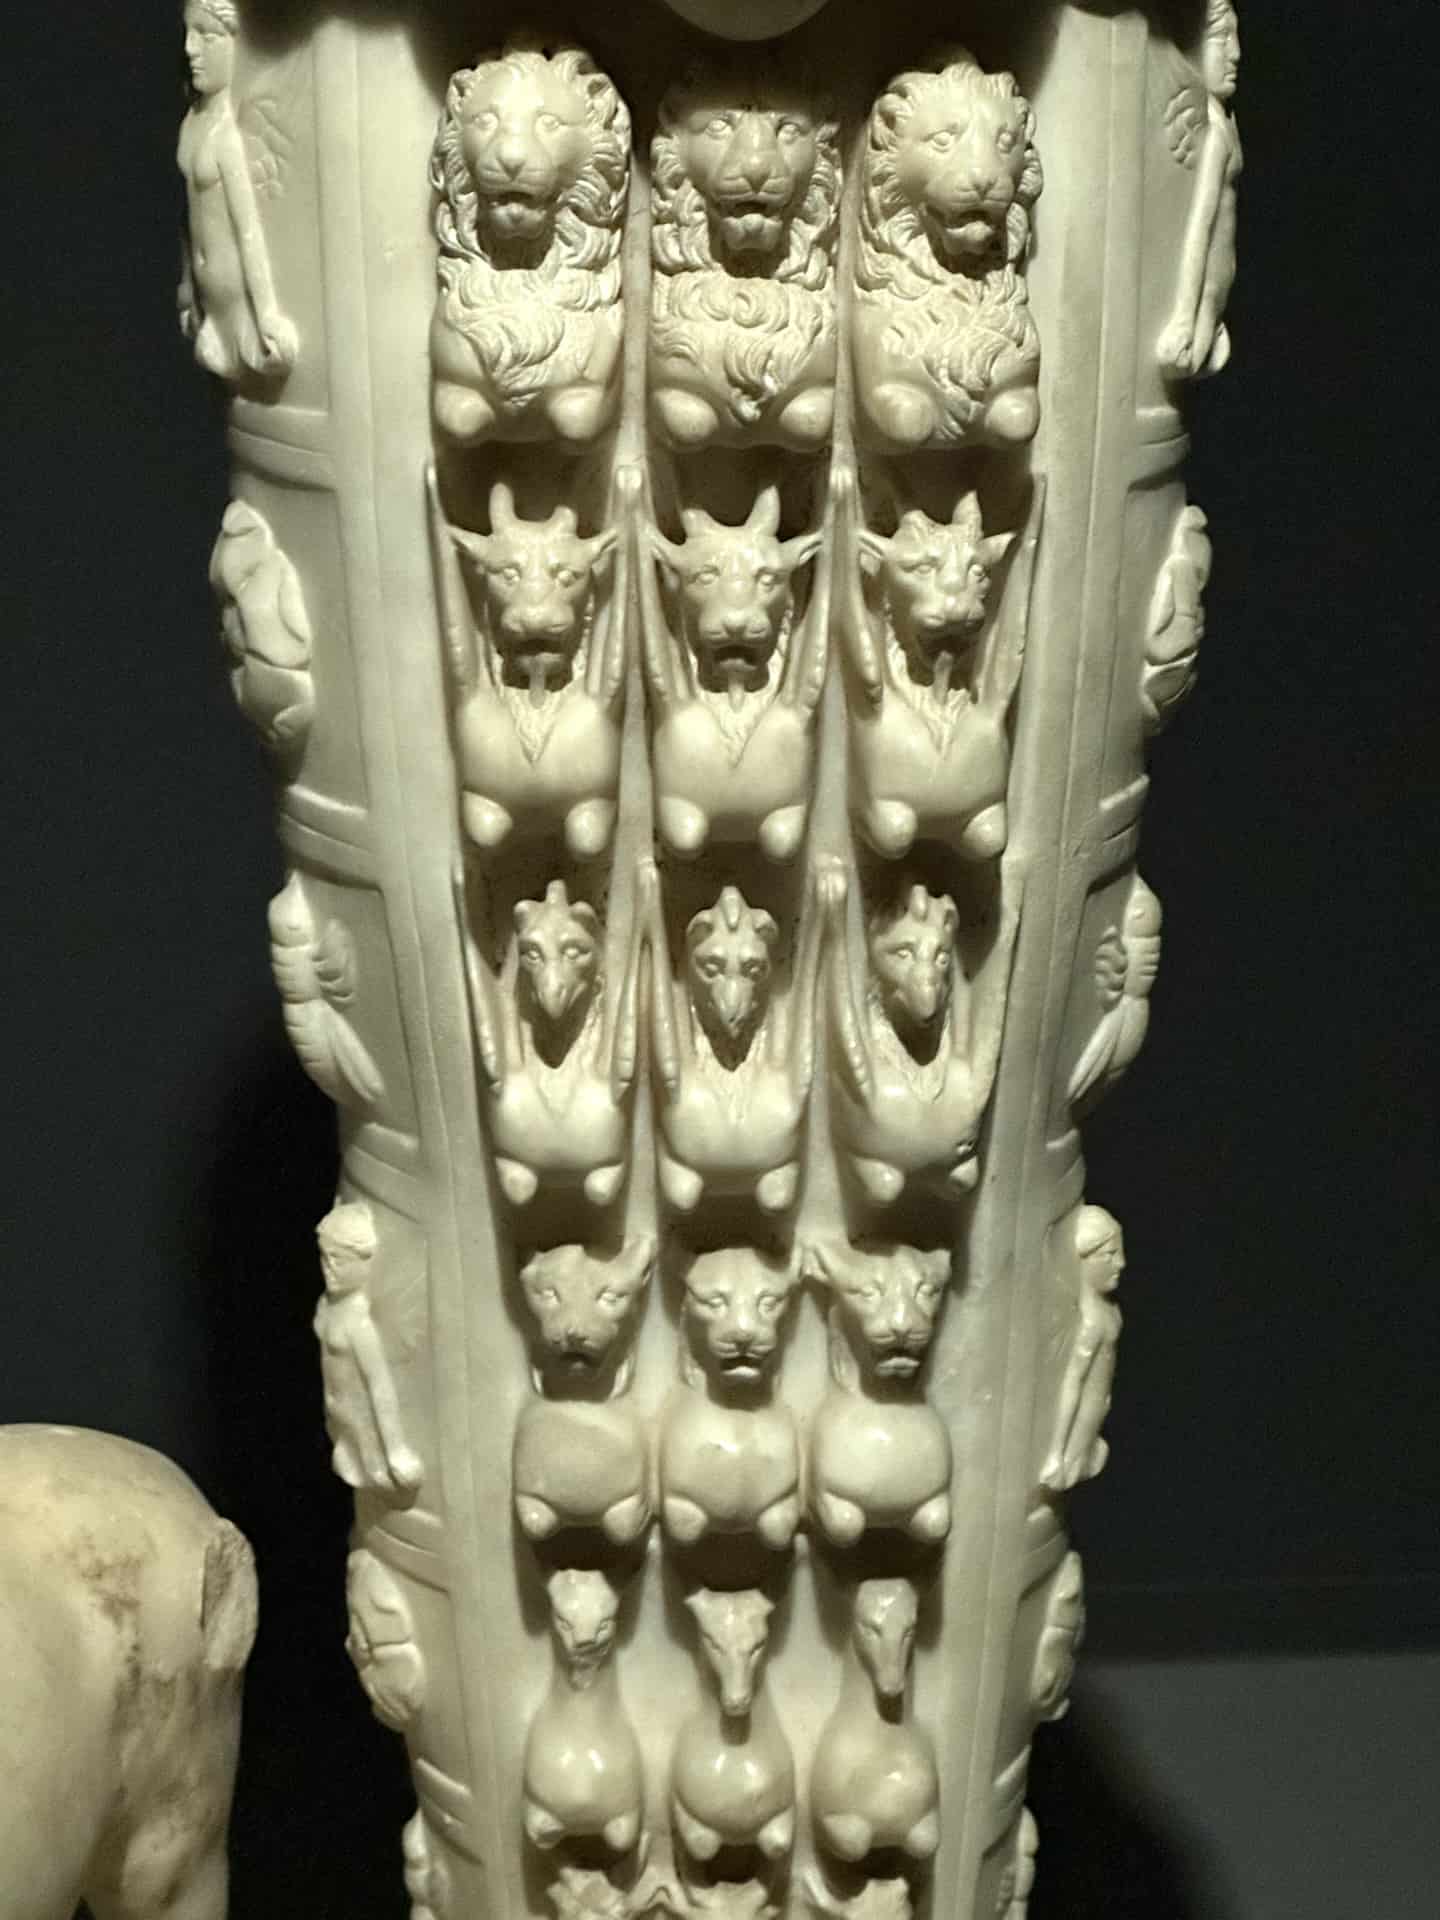 Animal figures on the Beautiful Artemis Statue